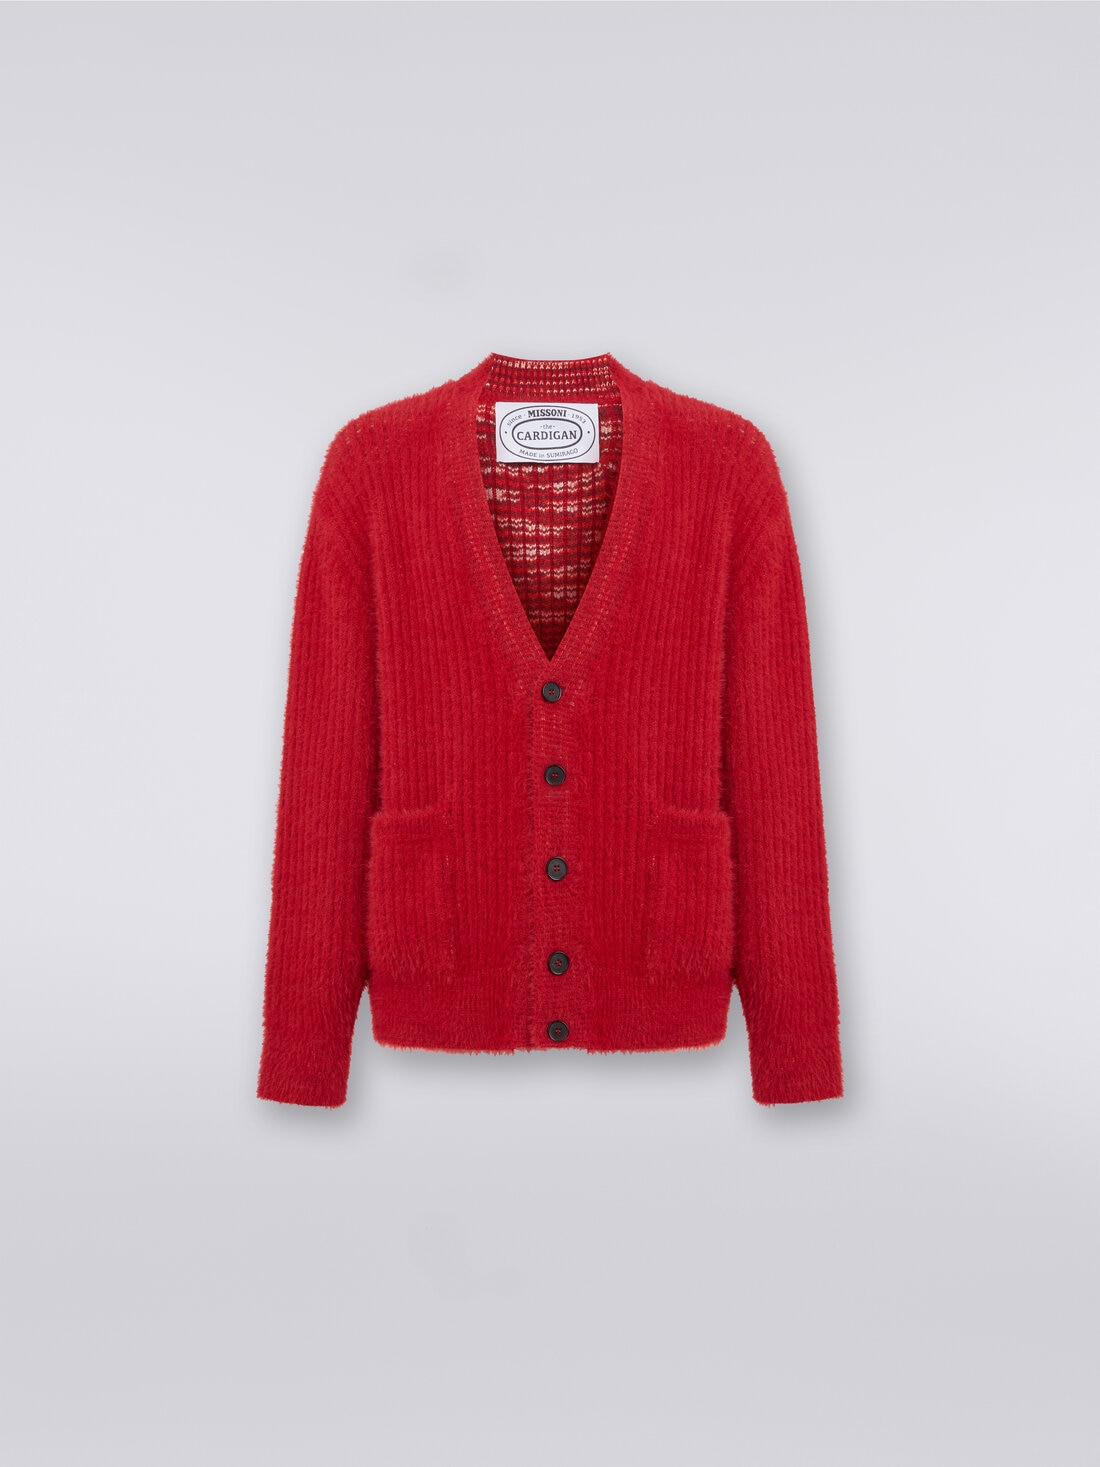 Chunky Cardigan in Sienna Red Tweed Oversized Sweater Loose